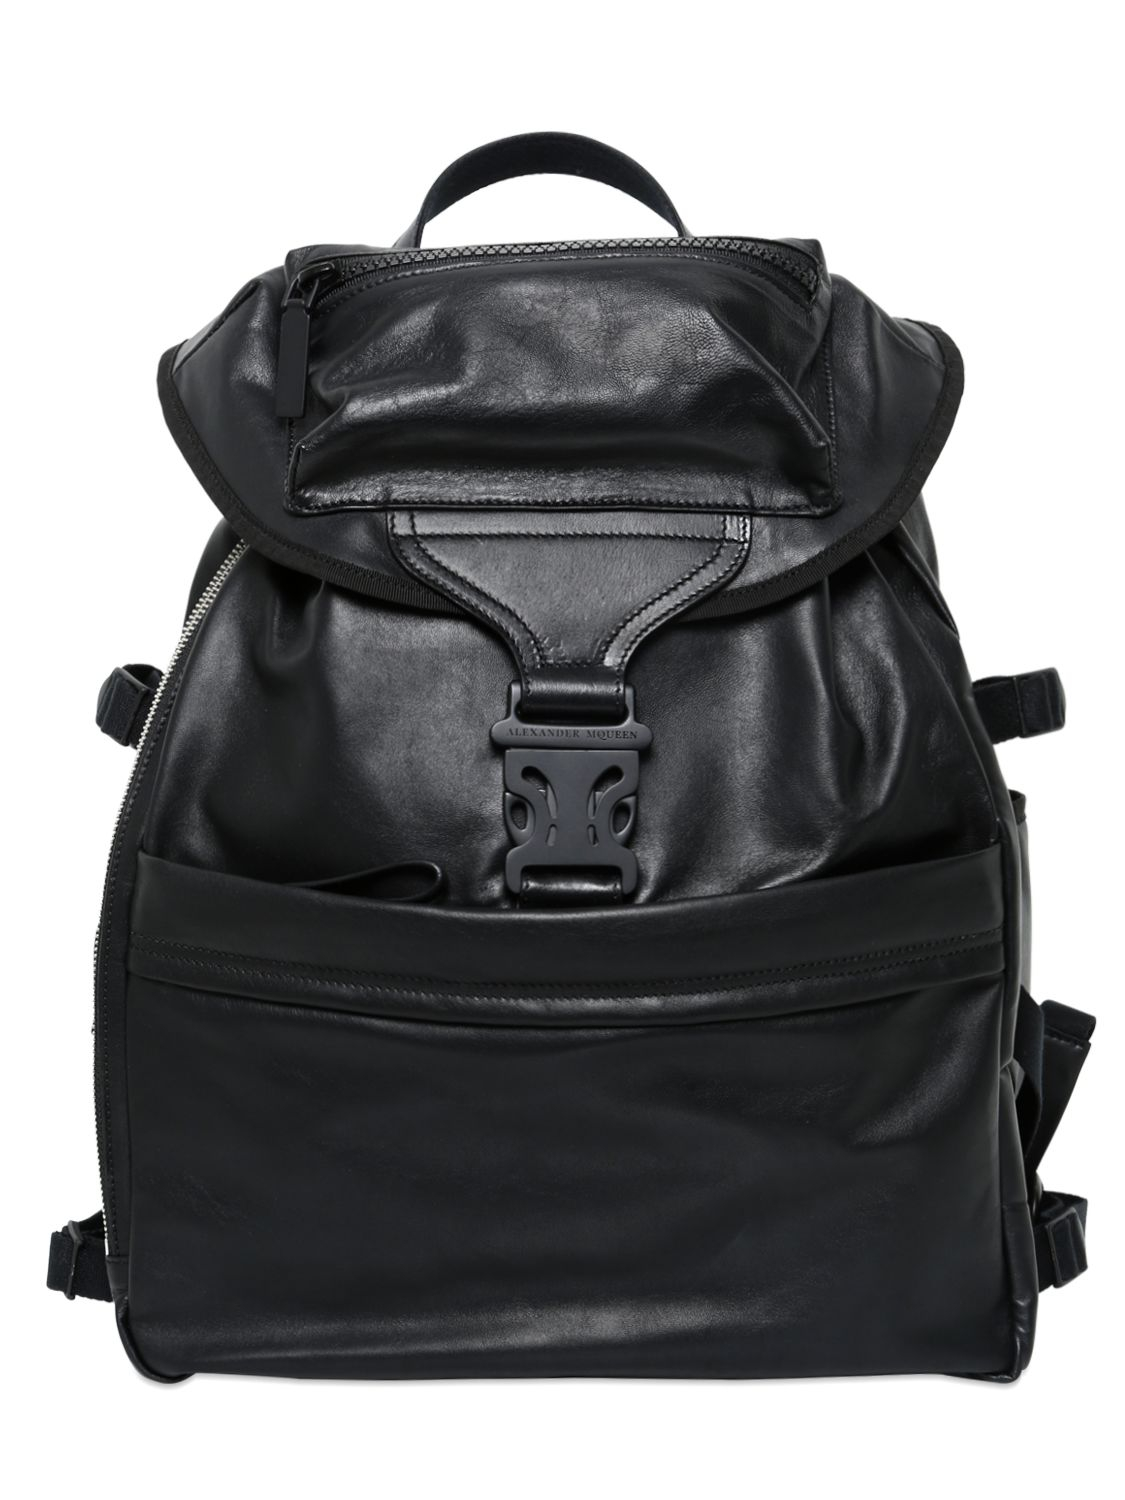 Alexander Mcqueen Leather Backpack in Black for Men - Lyst